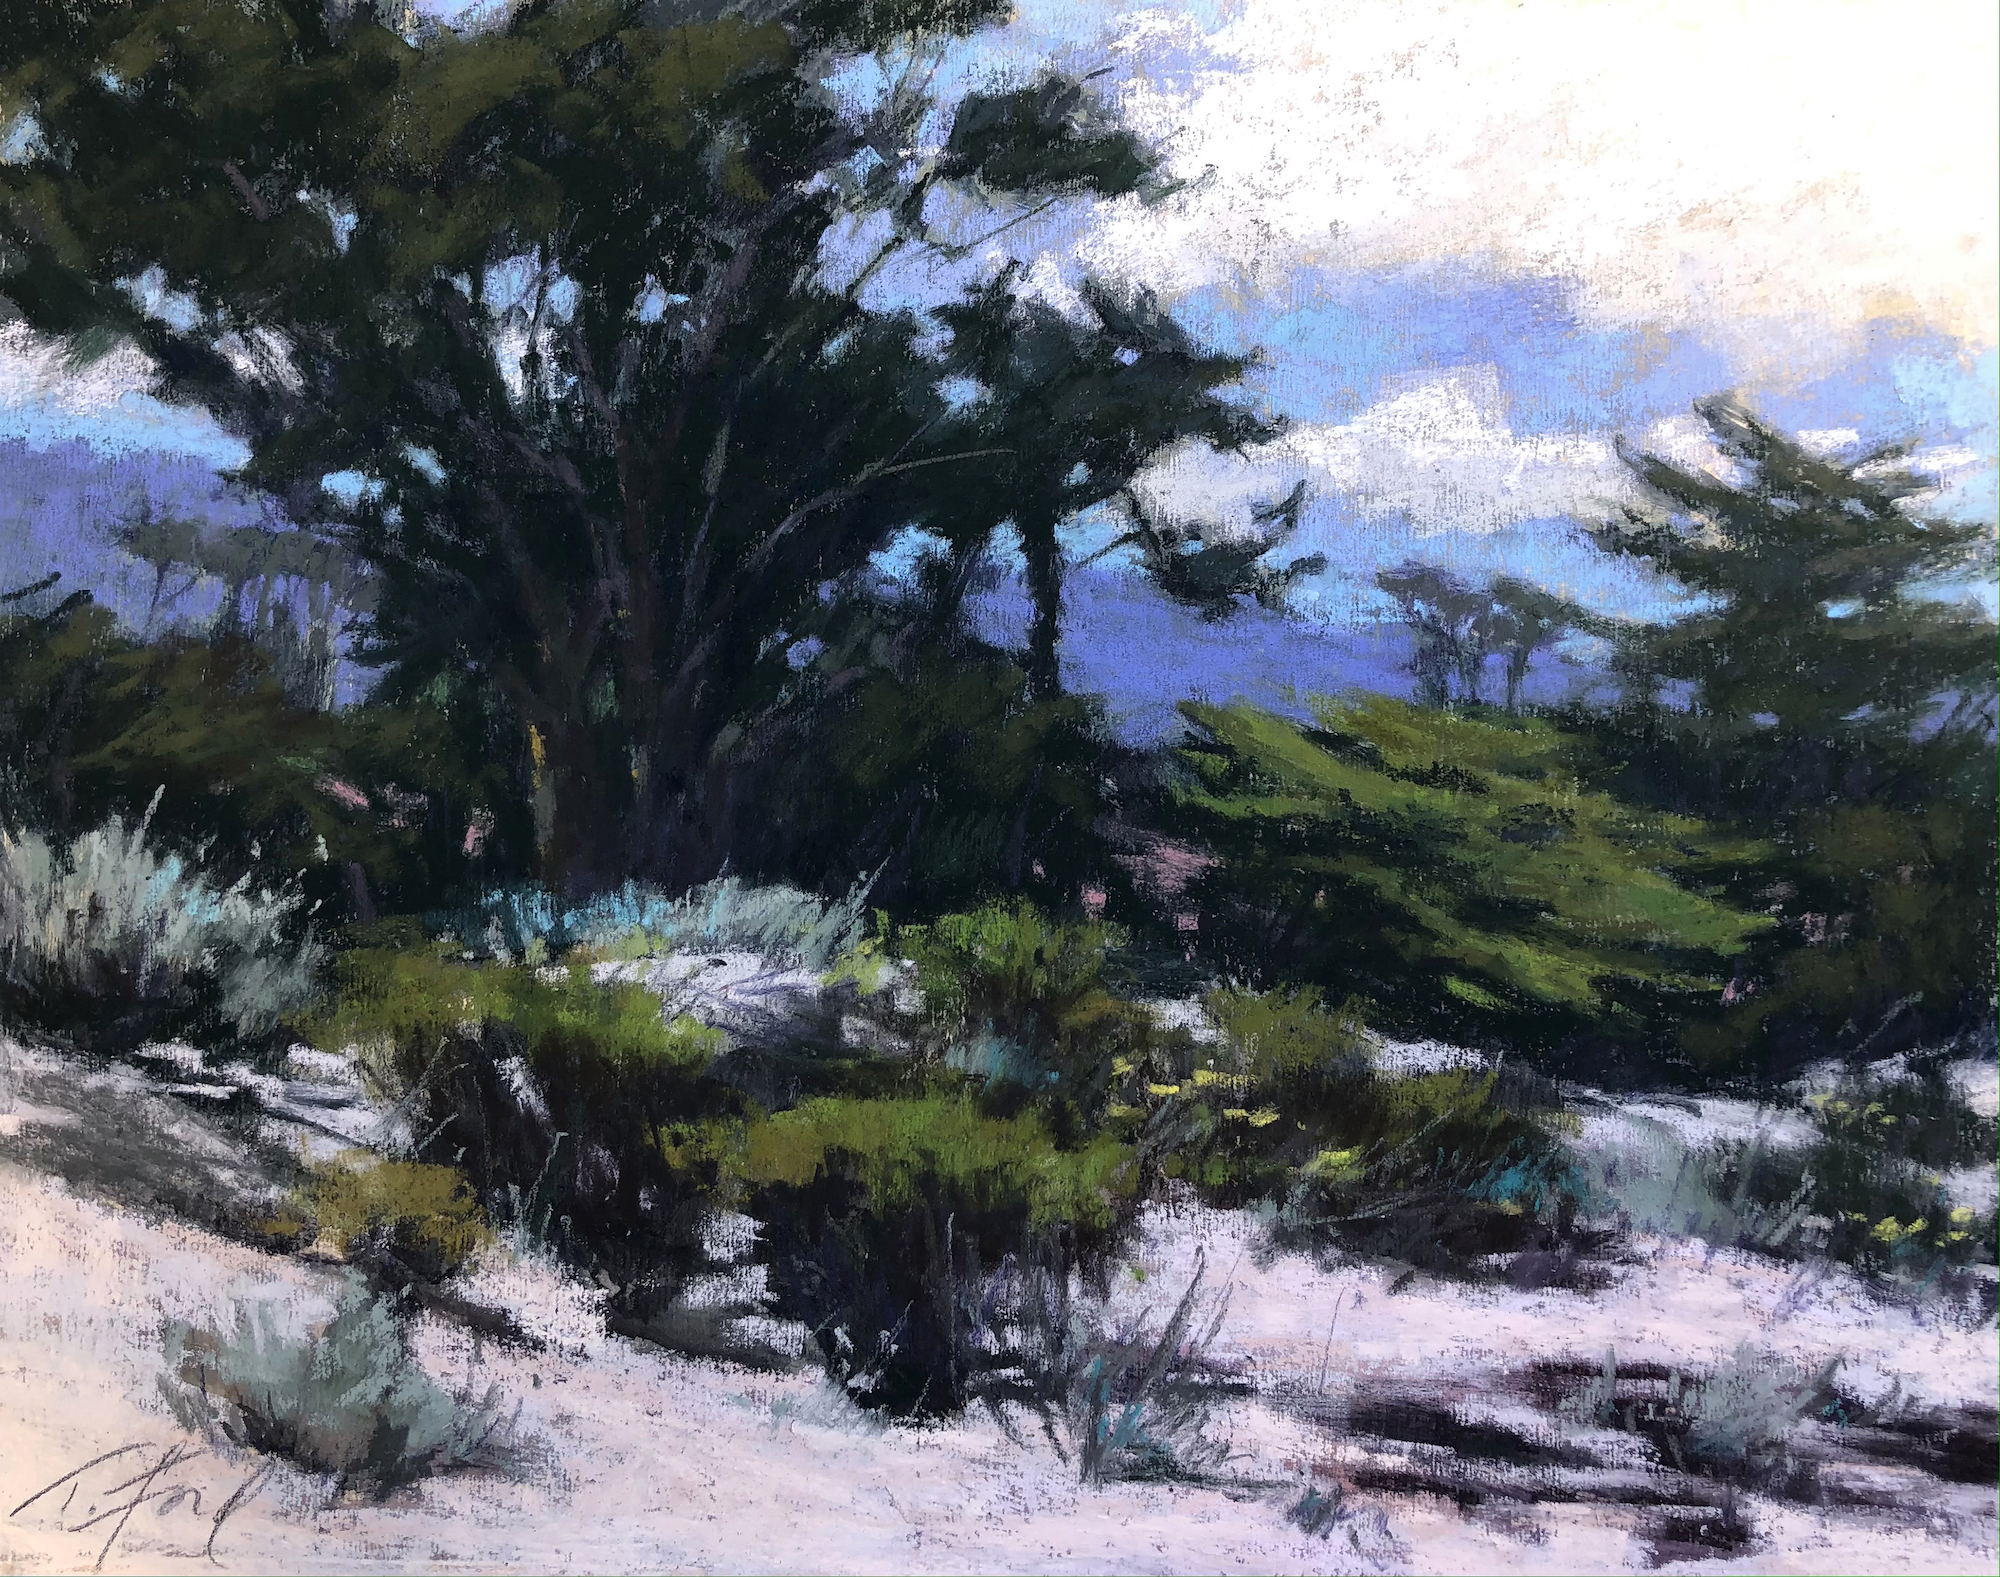 Terri Ford, "Dune Foliage," pastel, 11x14 in. 2nd Place award at Carmel Plein Air Festival 2022